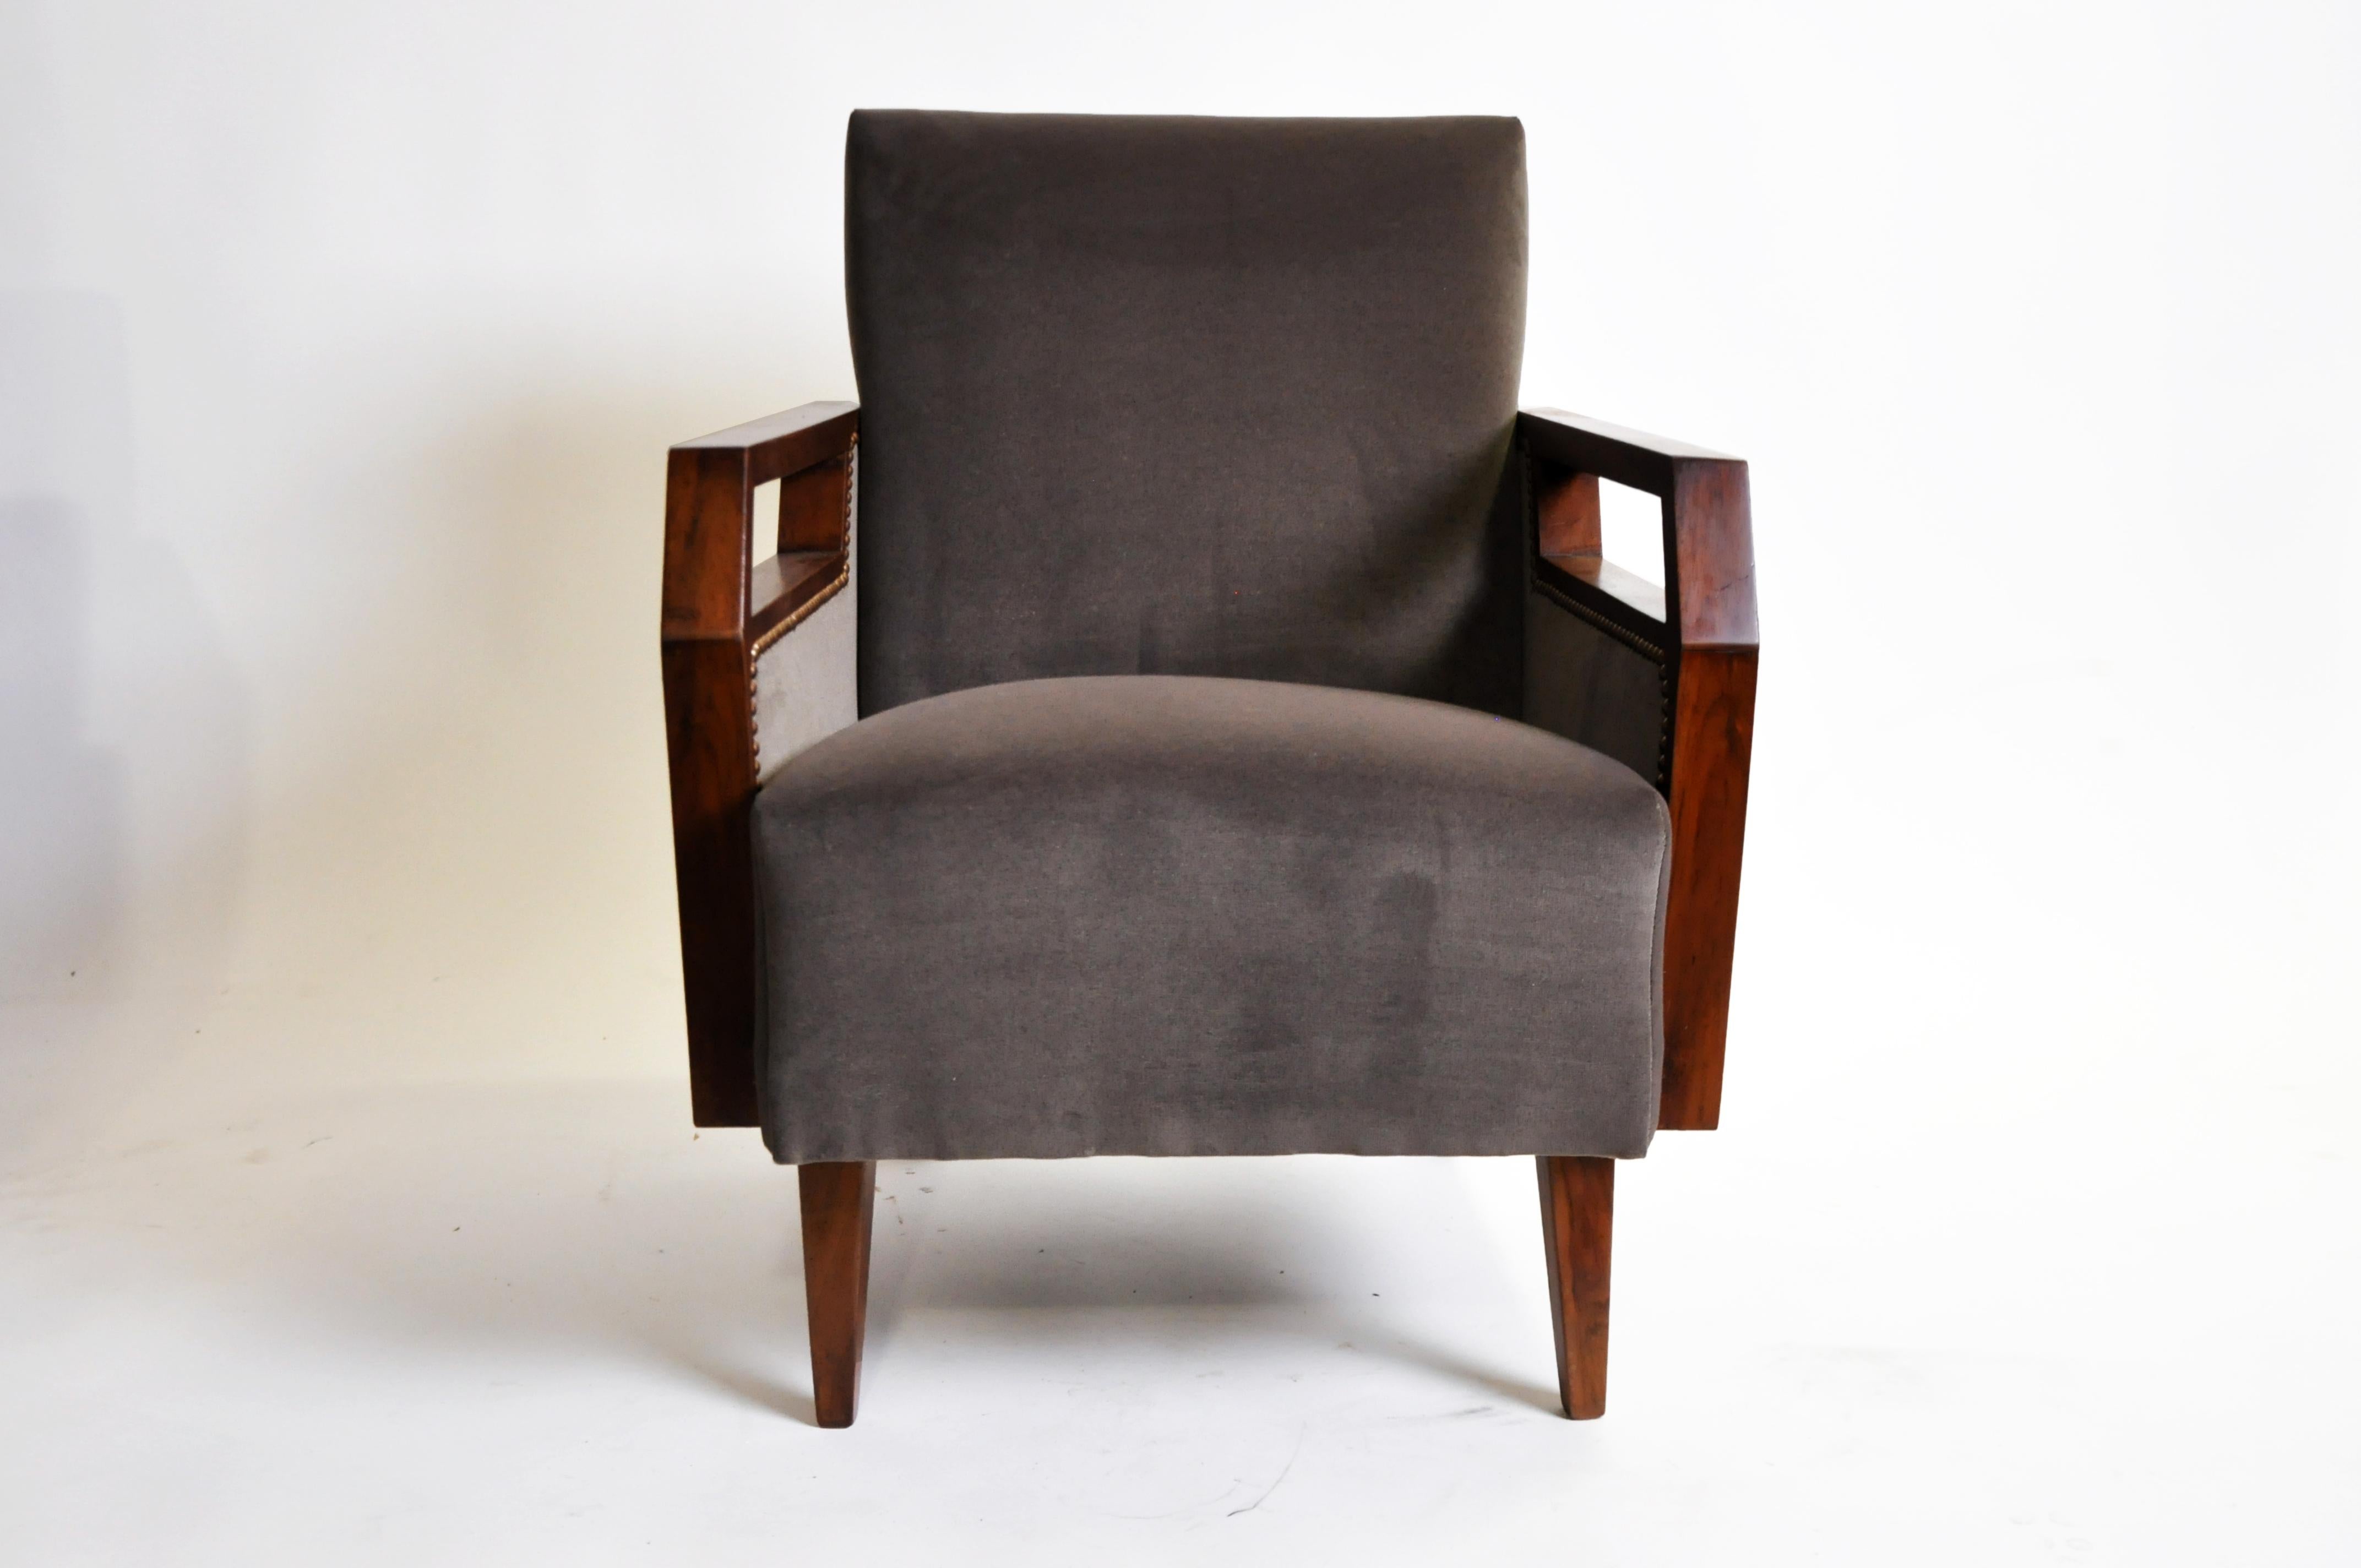 Pair of Mid-Century Modern Chairs 1